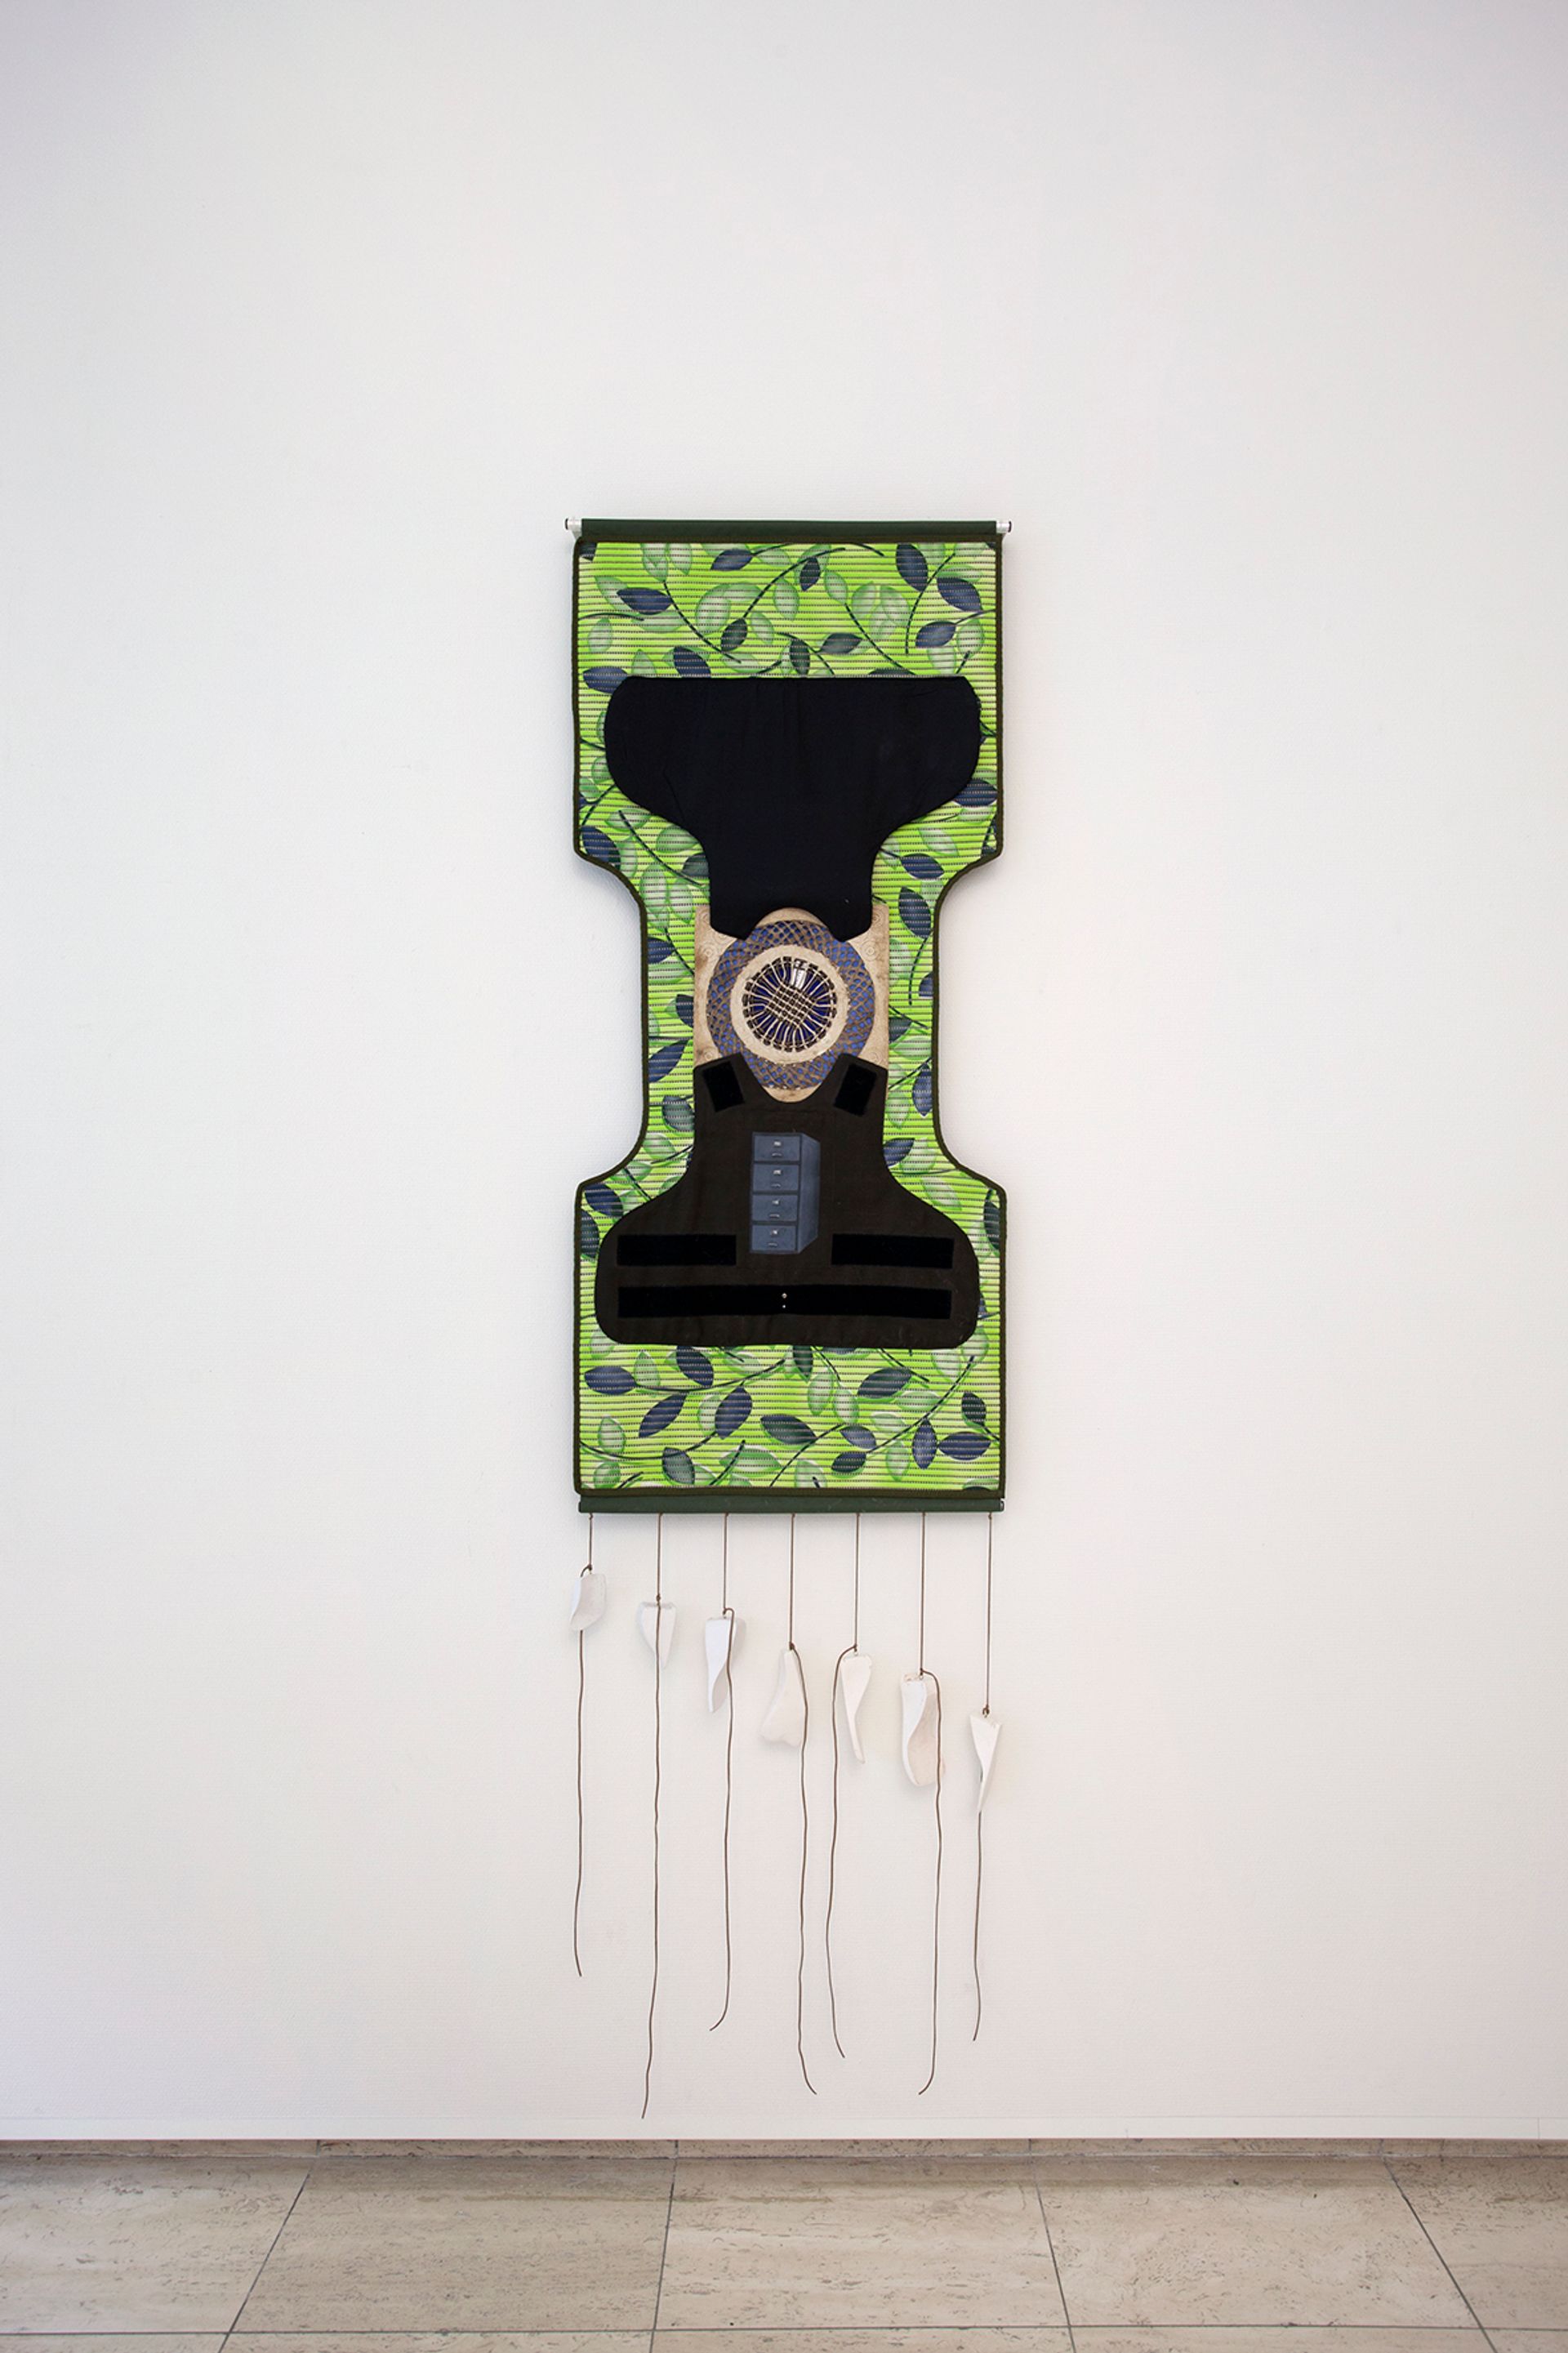 Ana Navas, United, 2018, mat, plaster, fabric, paper, metal, bulletproof vest, piercing, 193 × 65 cm, photo: Otto Polman